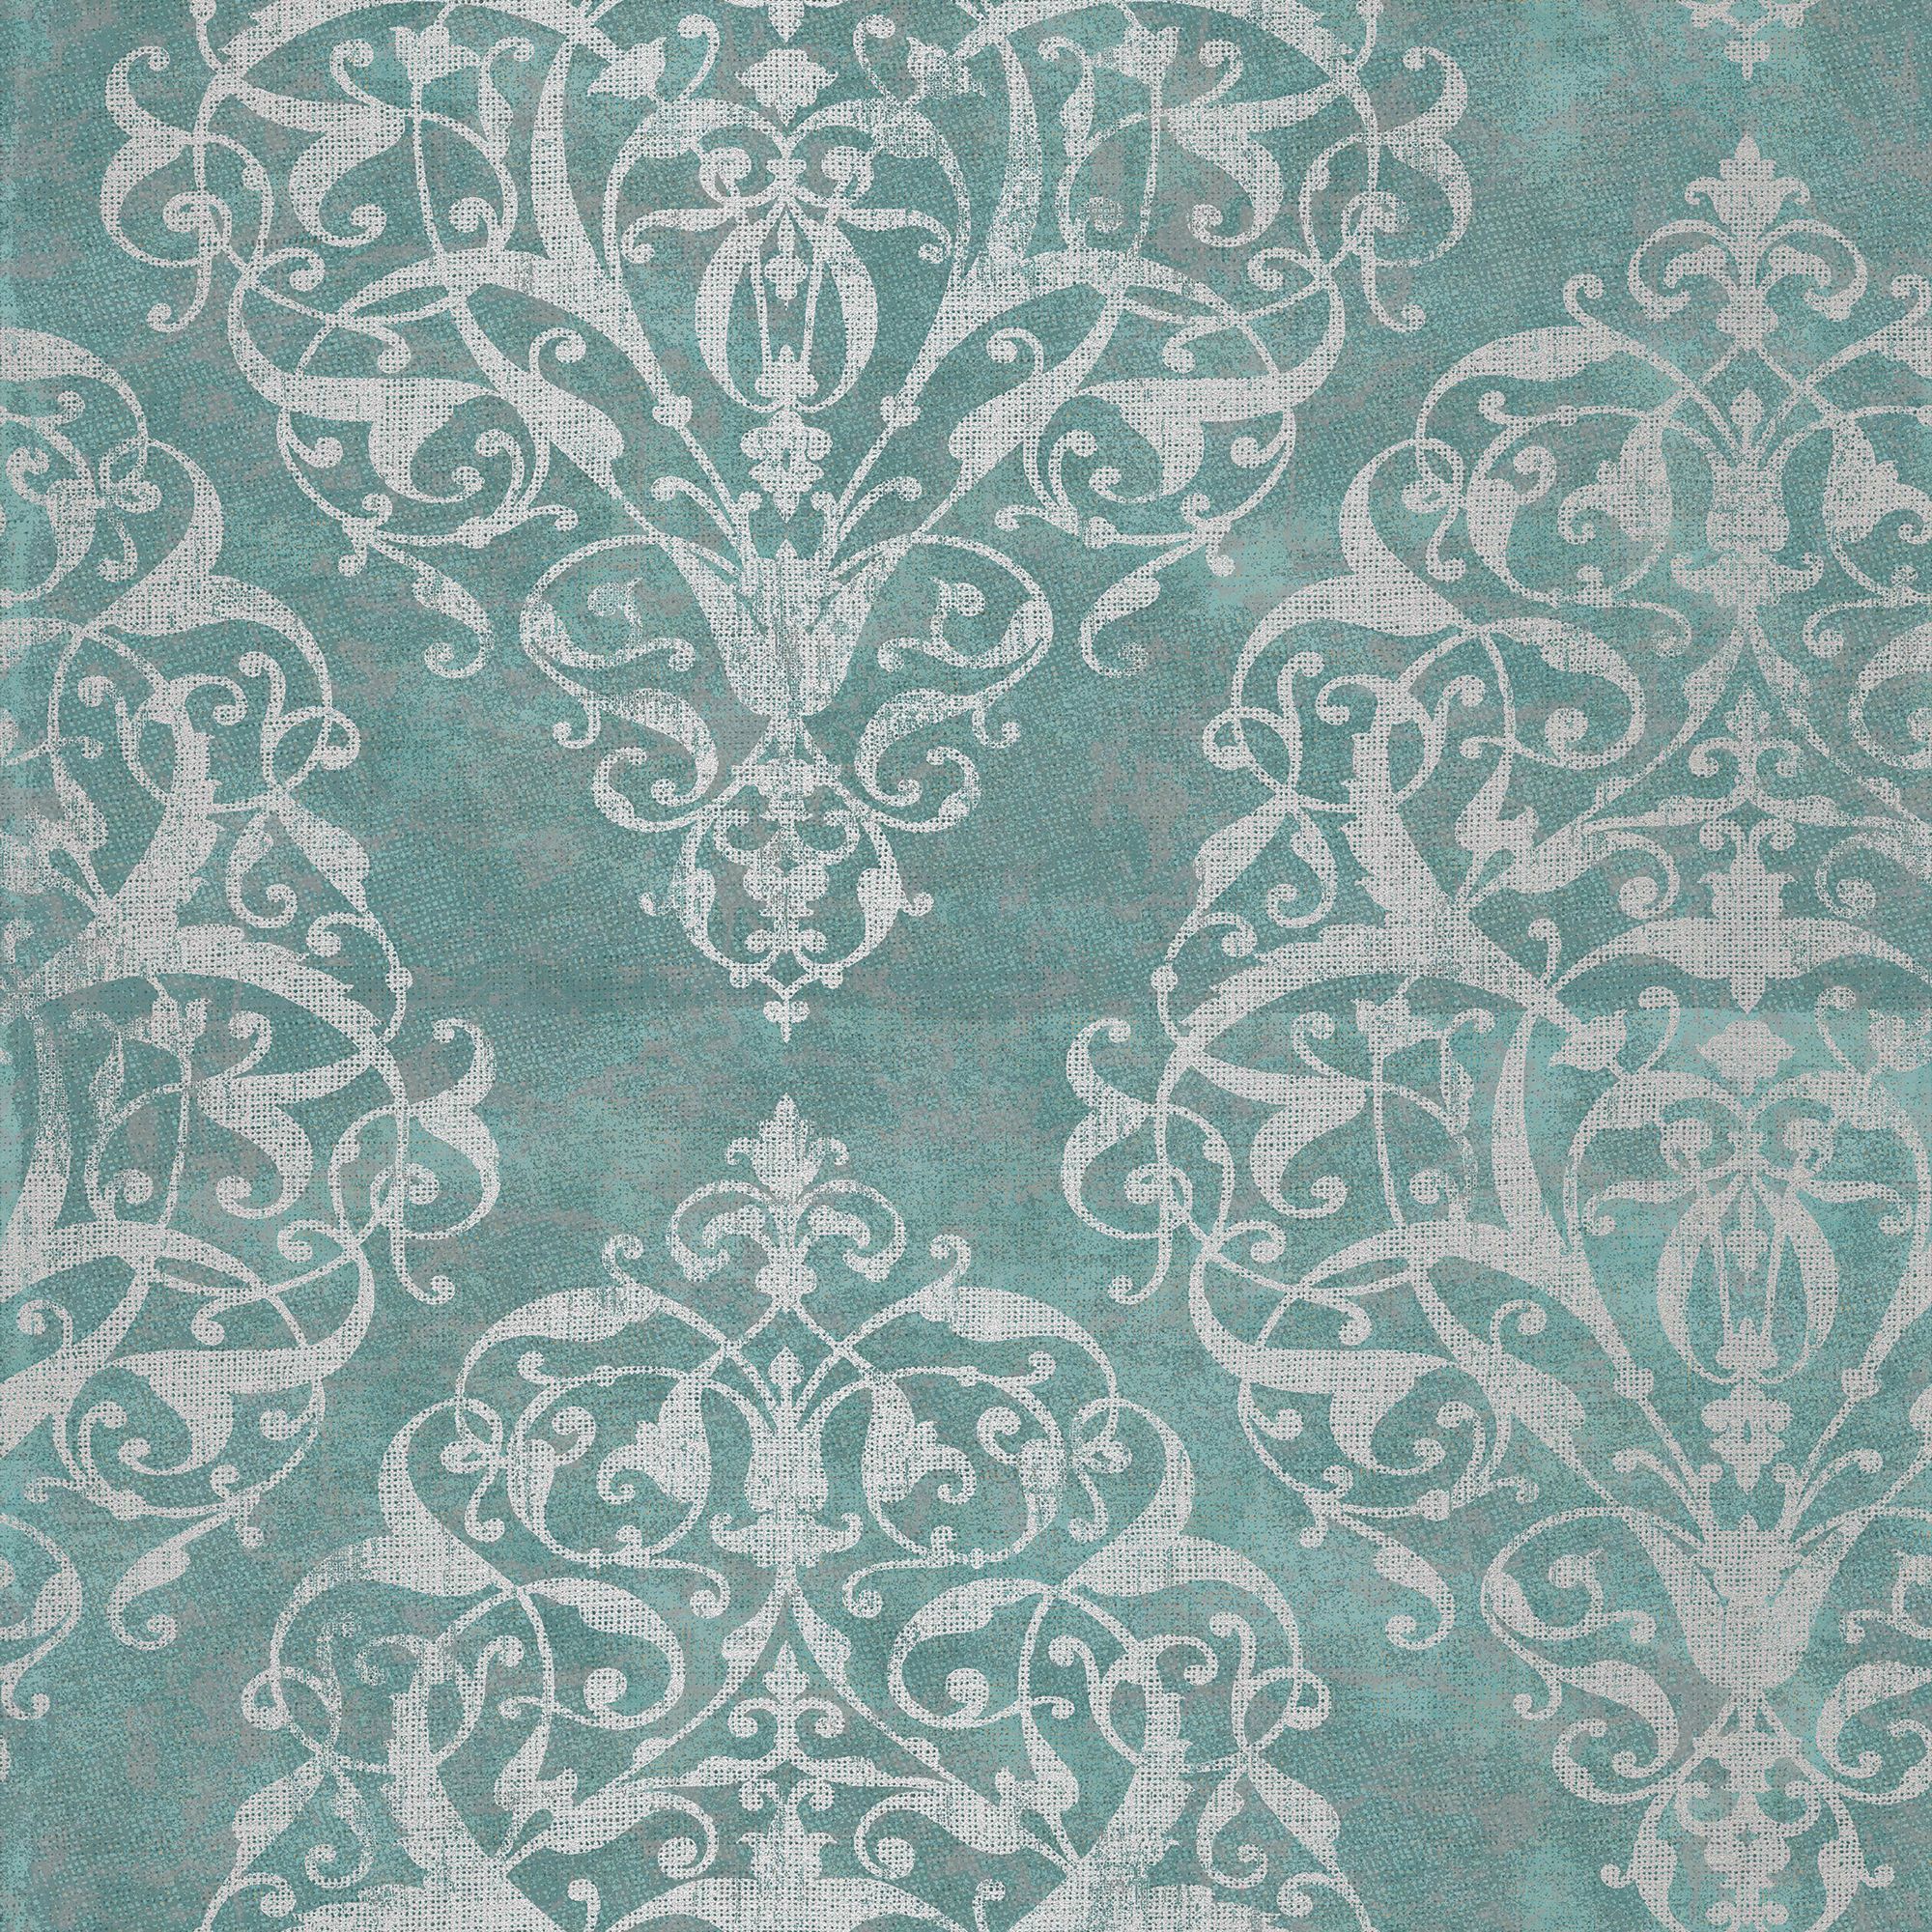 Boutique Shiraz Green & teal Metallic effect Damask Textured Wallpaper Sample